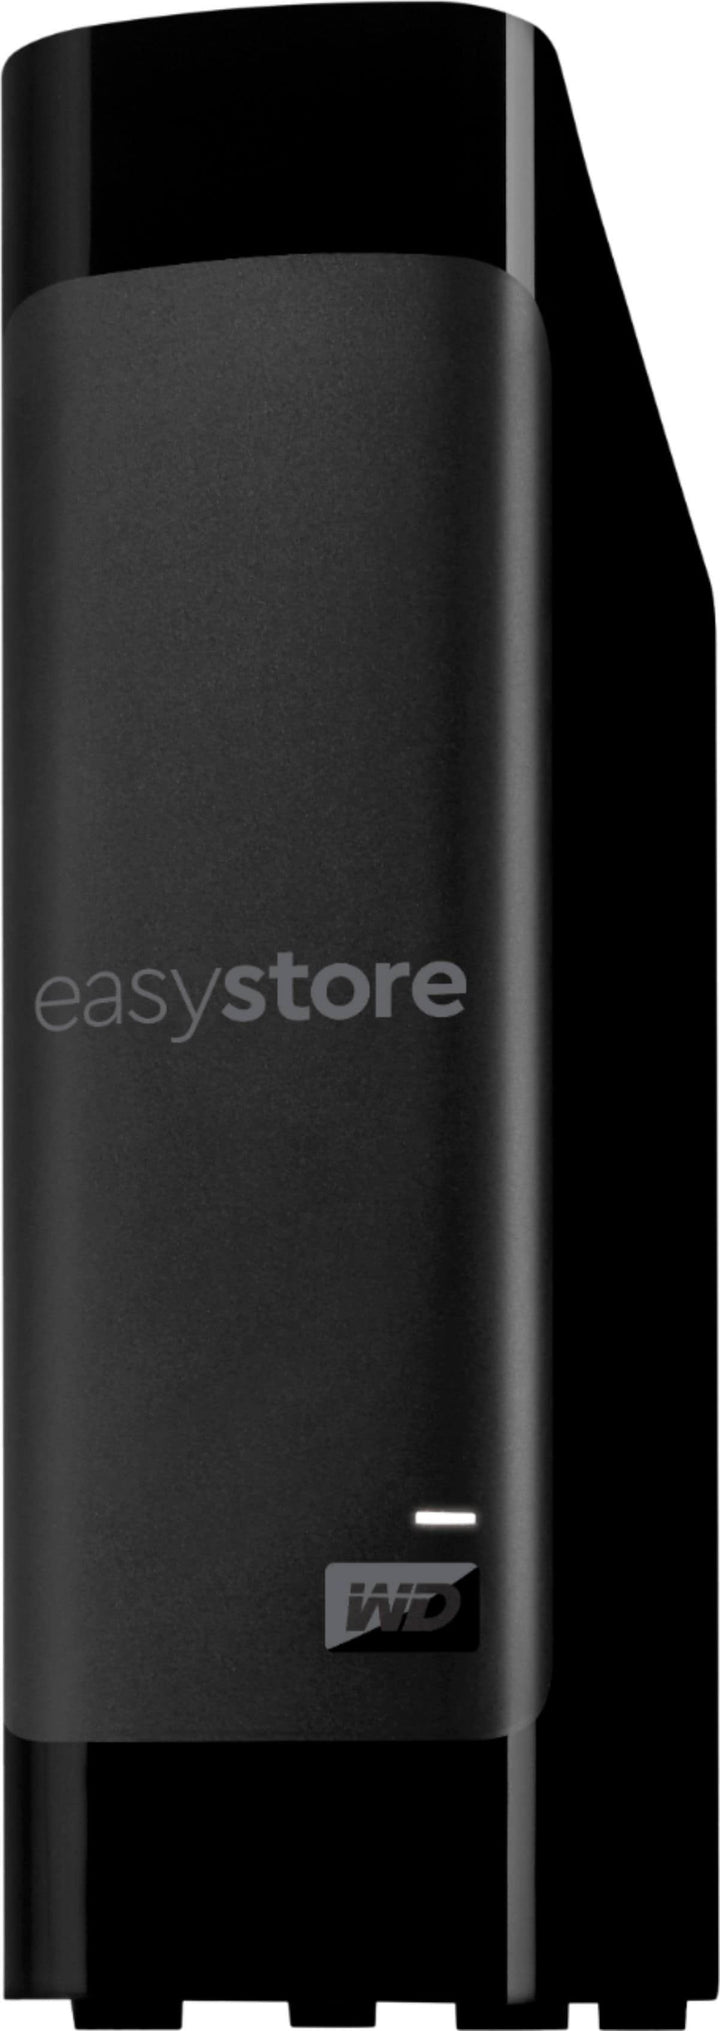 WD - easystore 8TB External USB 3.0 Hard Drive - Black_4